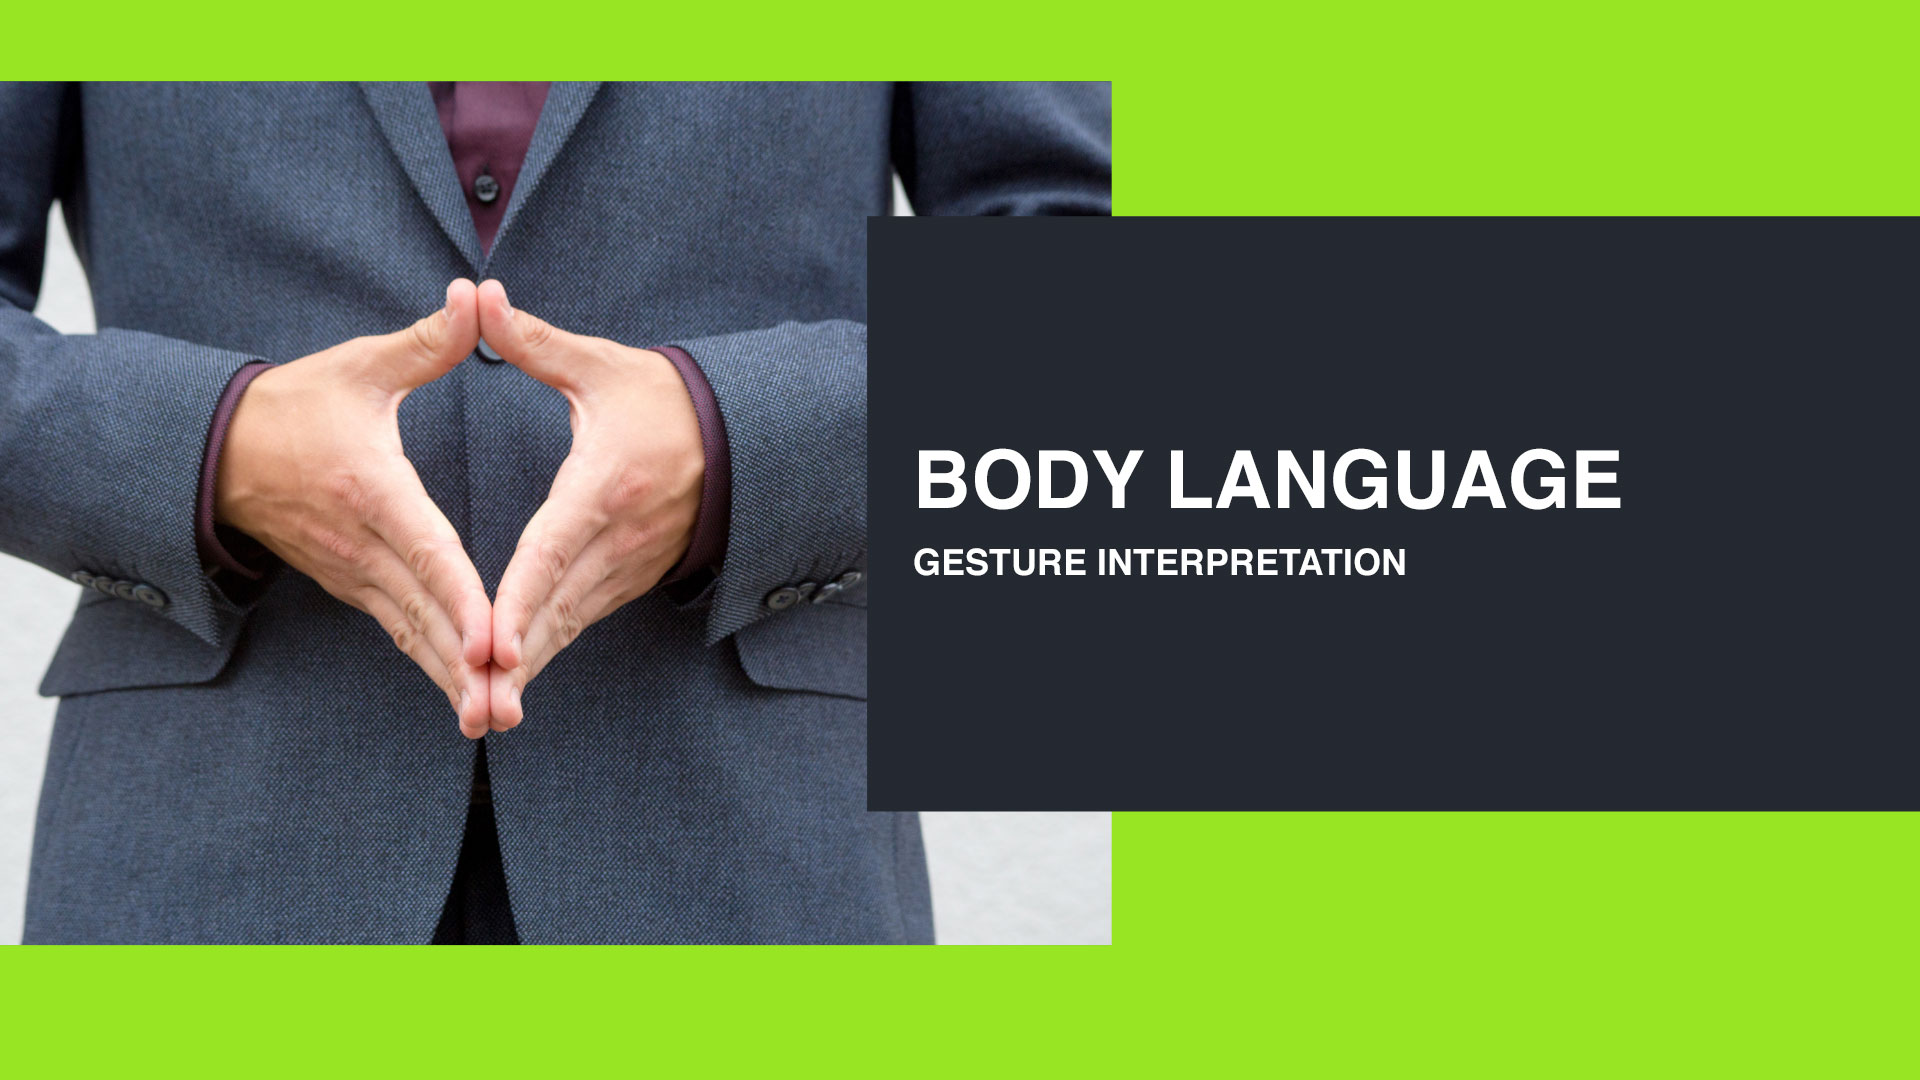 Body Language – Gesture Interpretation